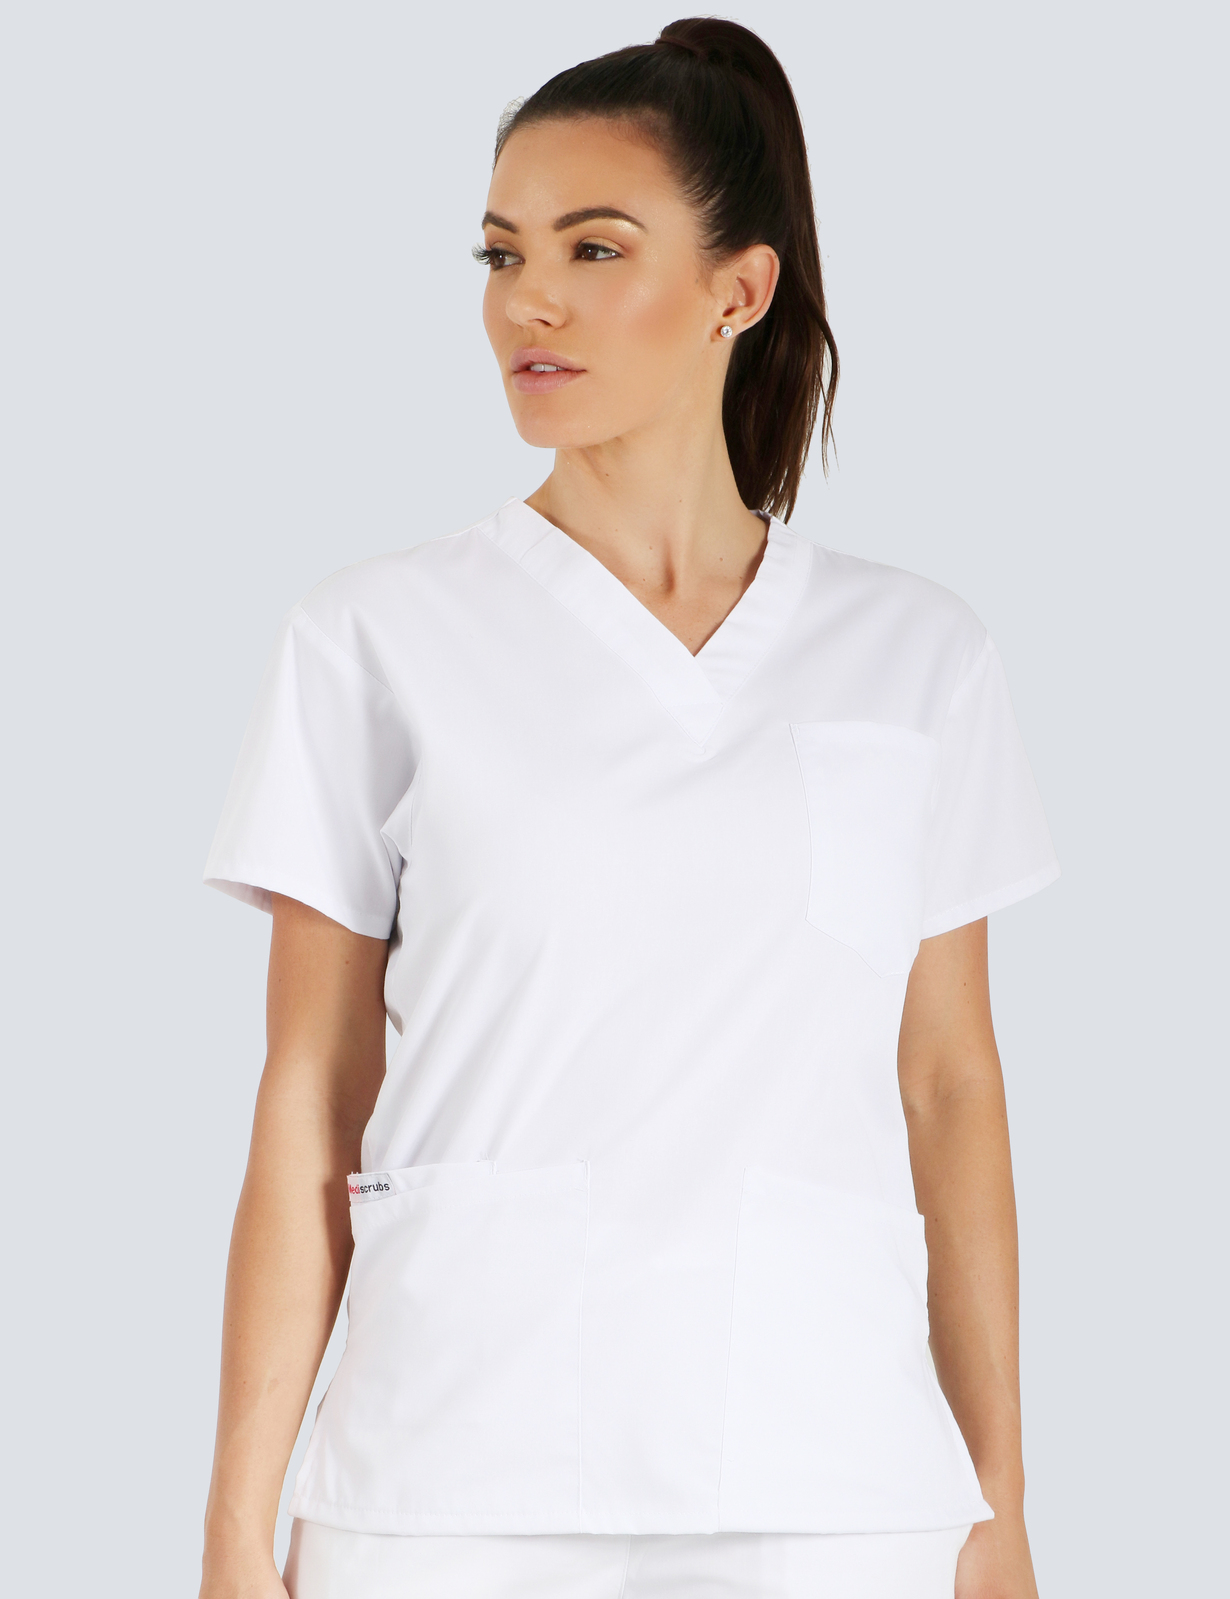 Queensland Children's Hospital Emergency Department Clinical Facilitator Uniform Top Bundle  (4 Pocket Top in White incl Logos)